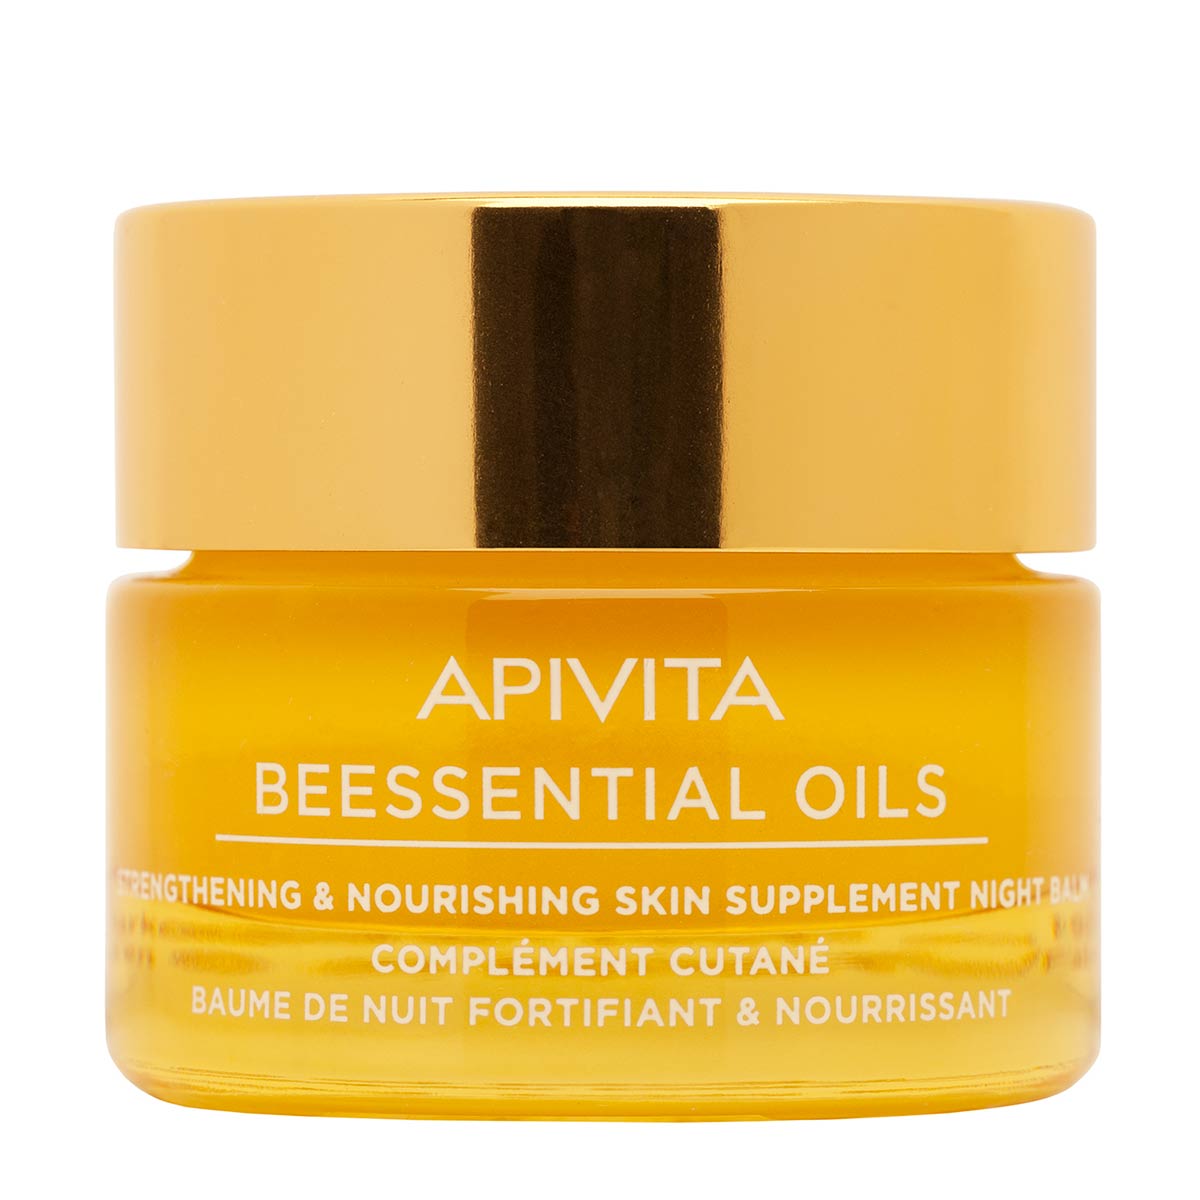 APIVITA BEESSENTIAL OILS Strengthening & Nourishing Skin Supplement Night Balm 15ml